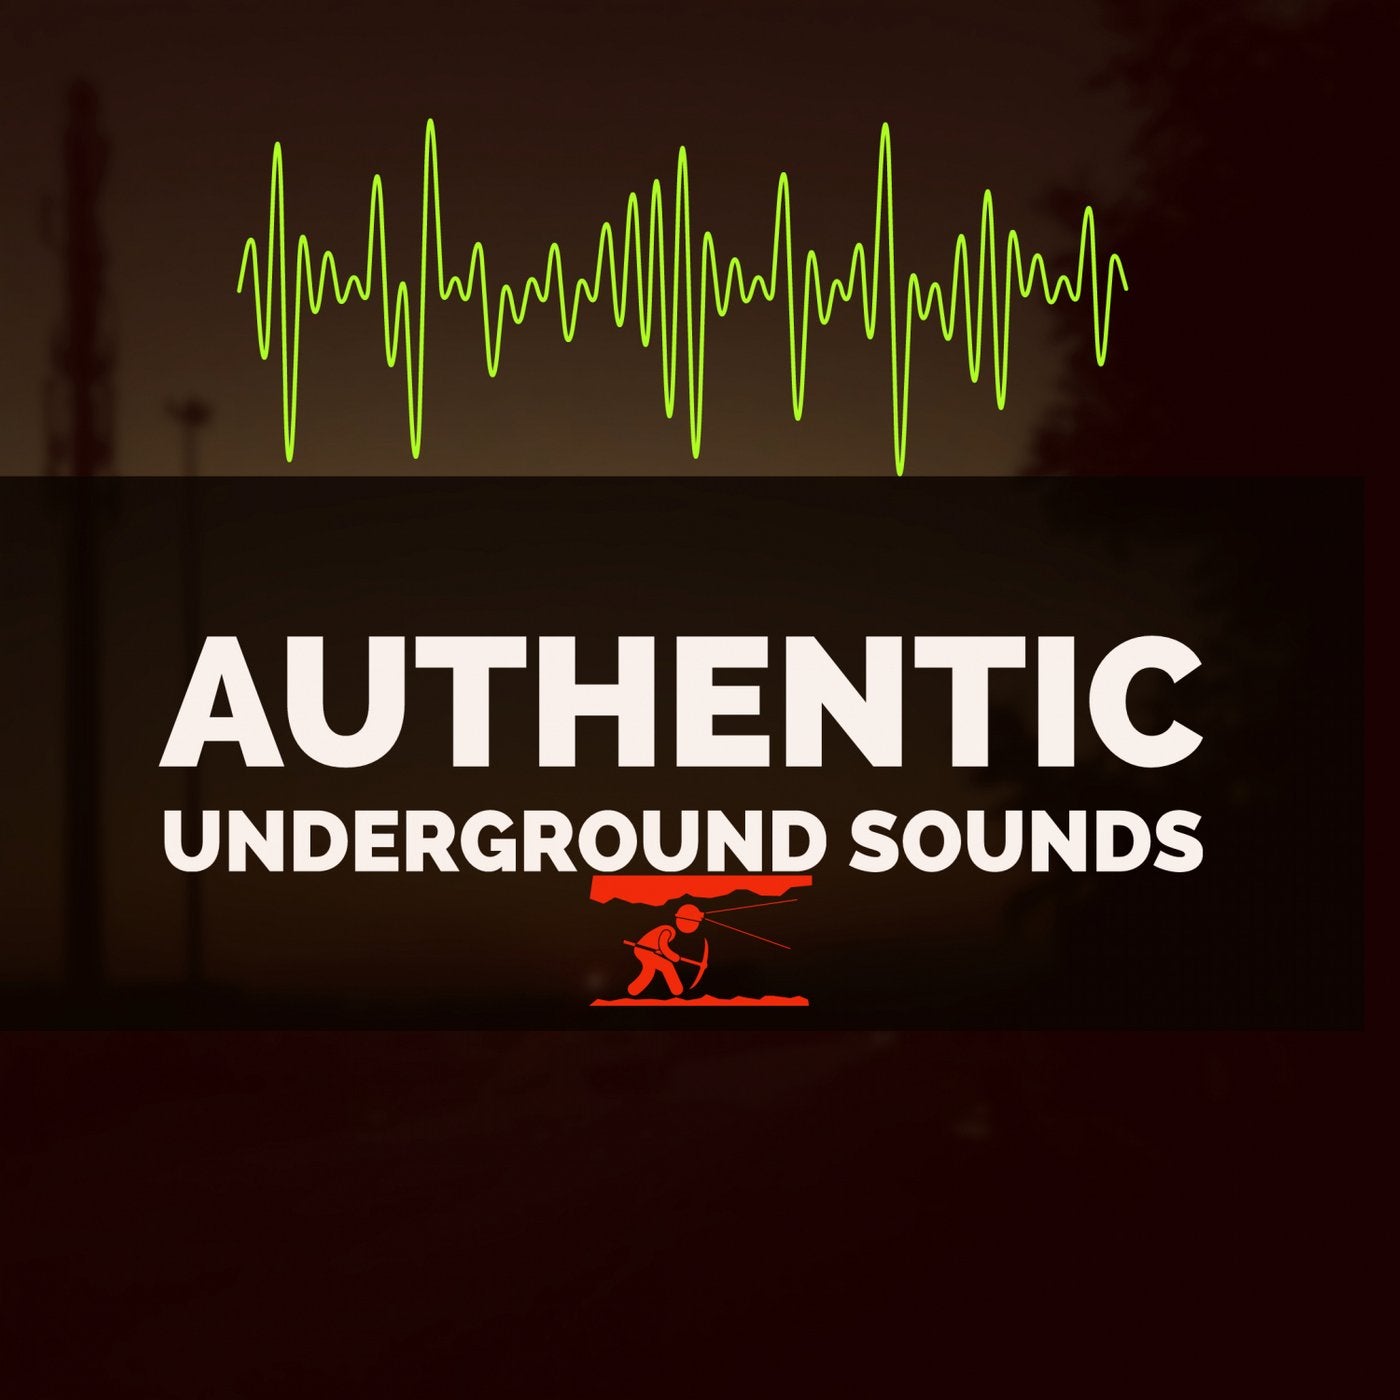 The Authentic Underground Sounds EP